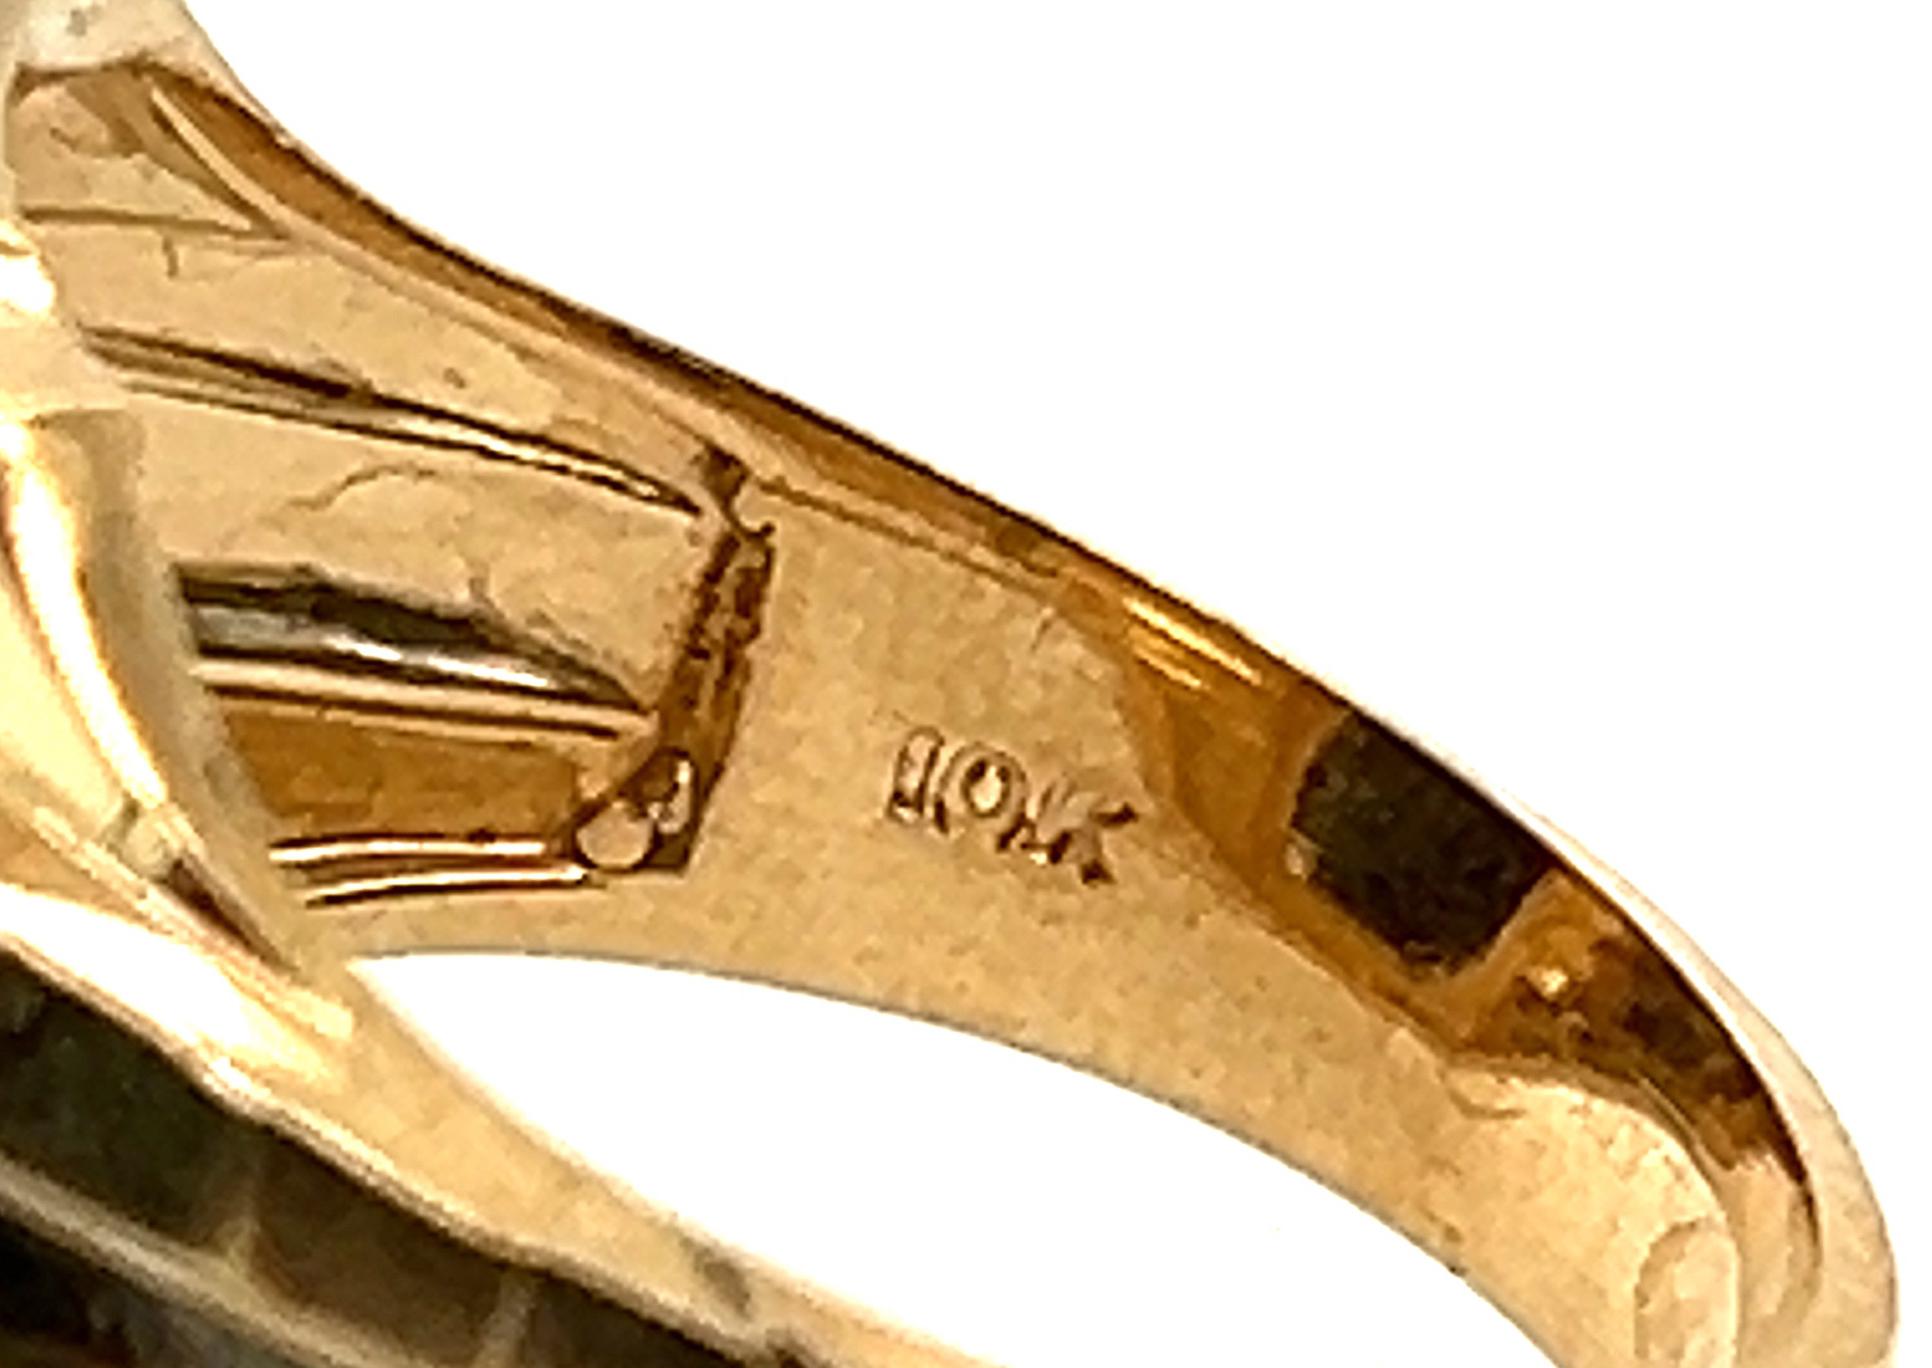 NOS Retro Mens Onyx Cocktail Ring Yellow Gold Antique Original 1940s-1950s 1